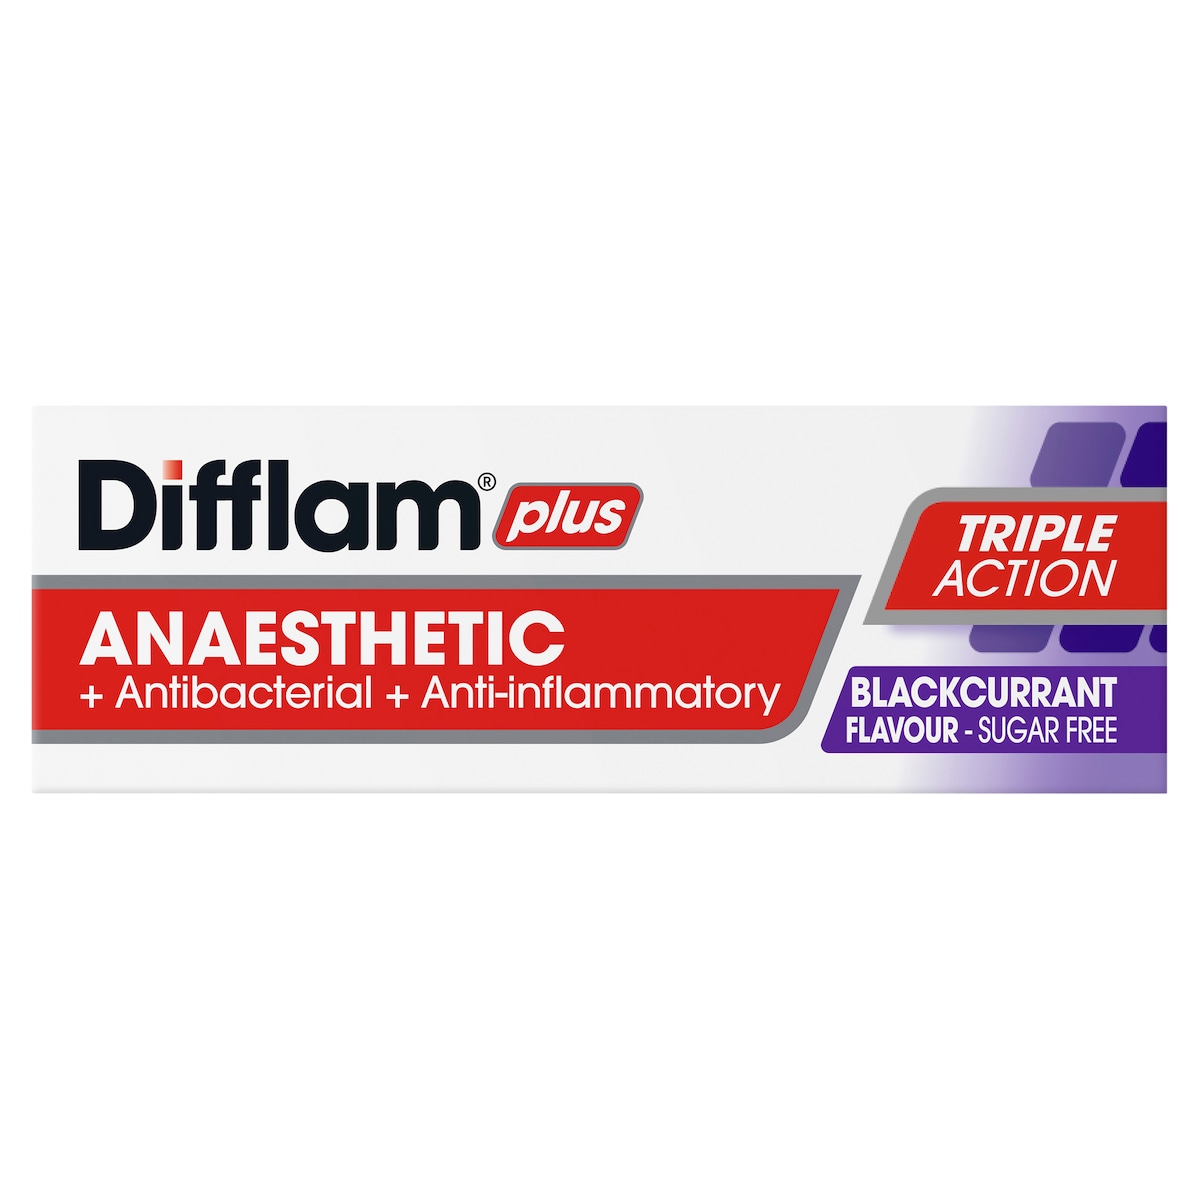 Difflam Plus Anaesthetic Sore Throat Lozenges Blackcurrant 16 Pack